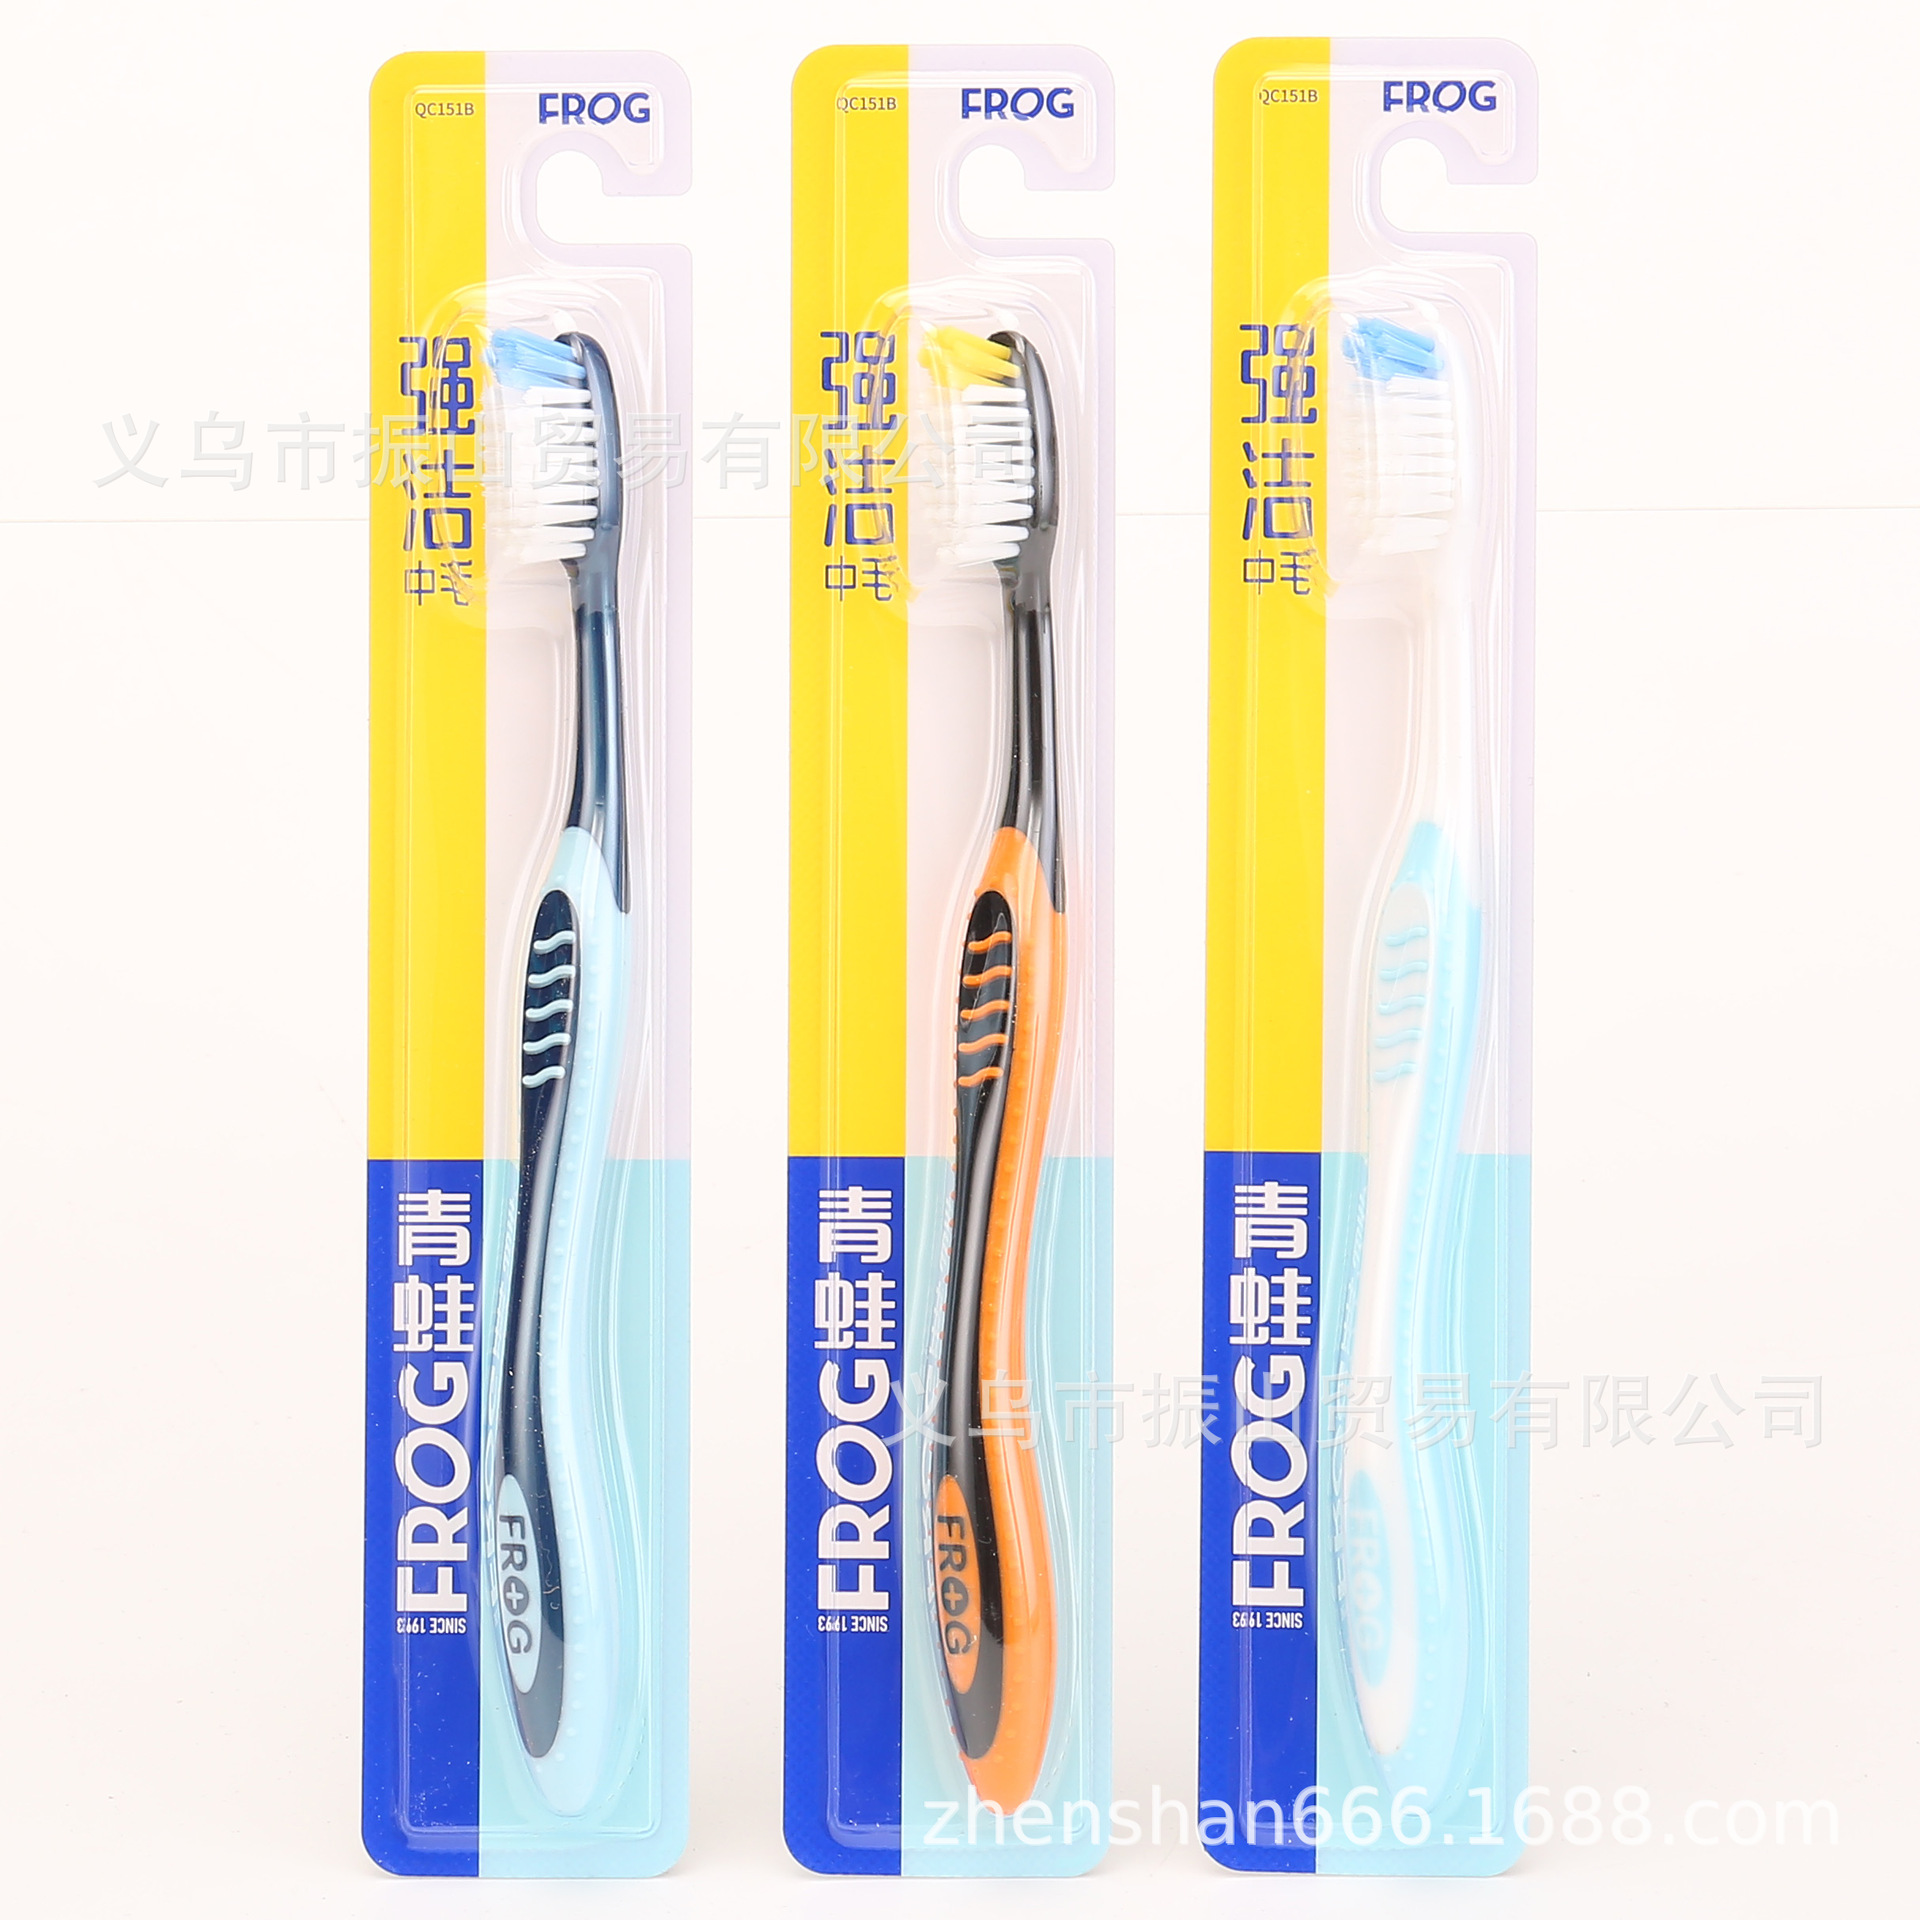 frog qc151b precursor bristle wave tooth cleaning medium hair toothbrush